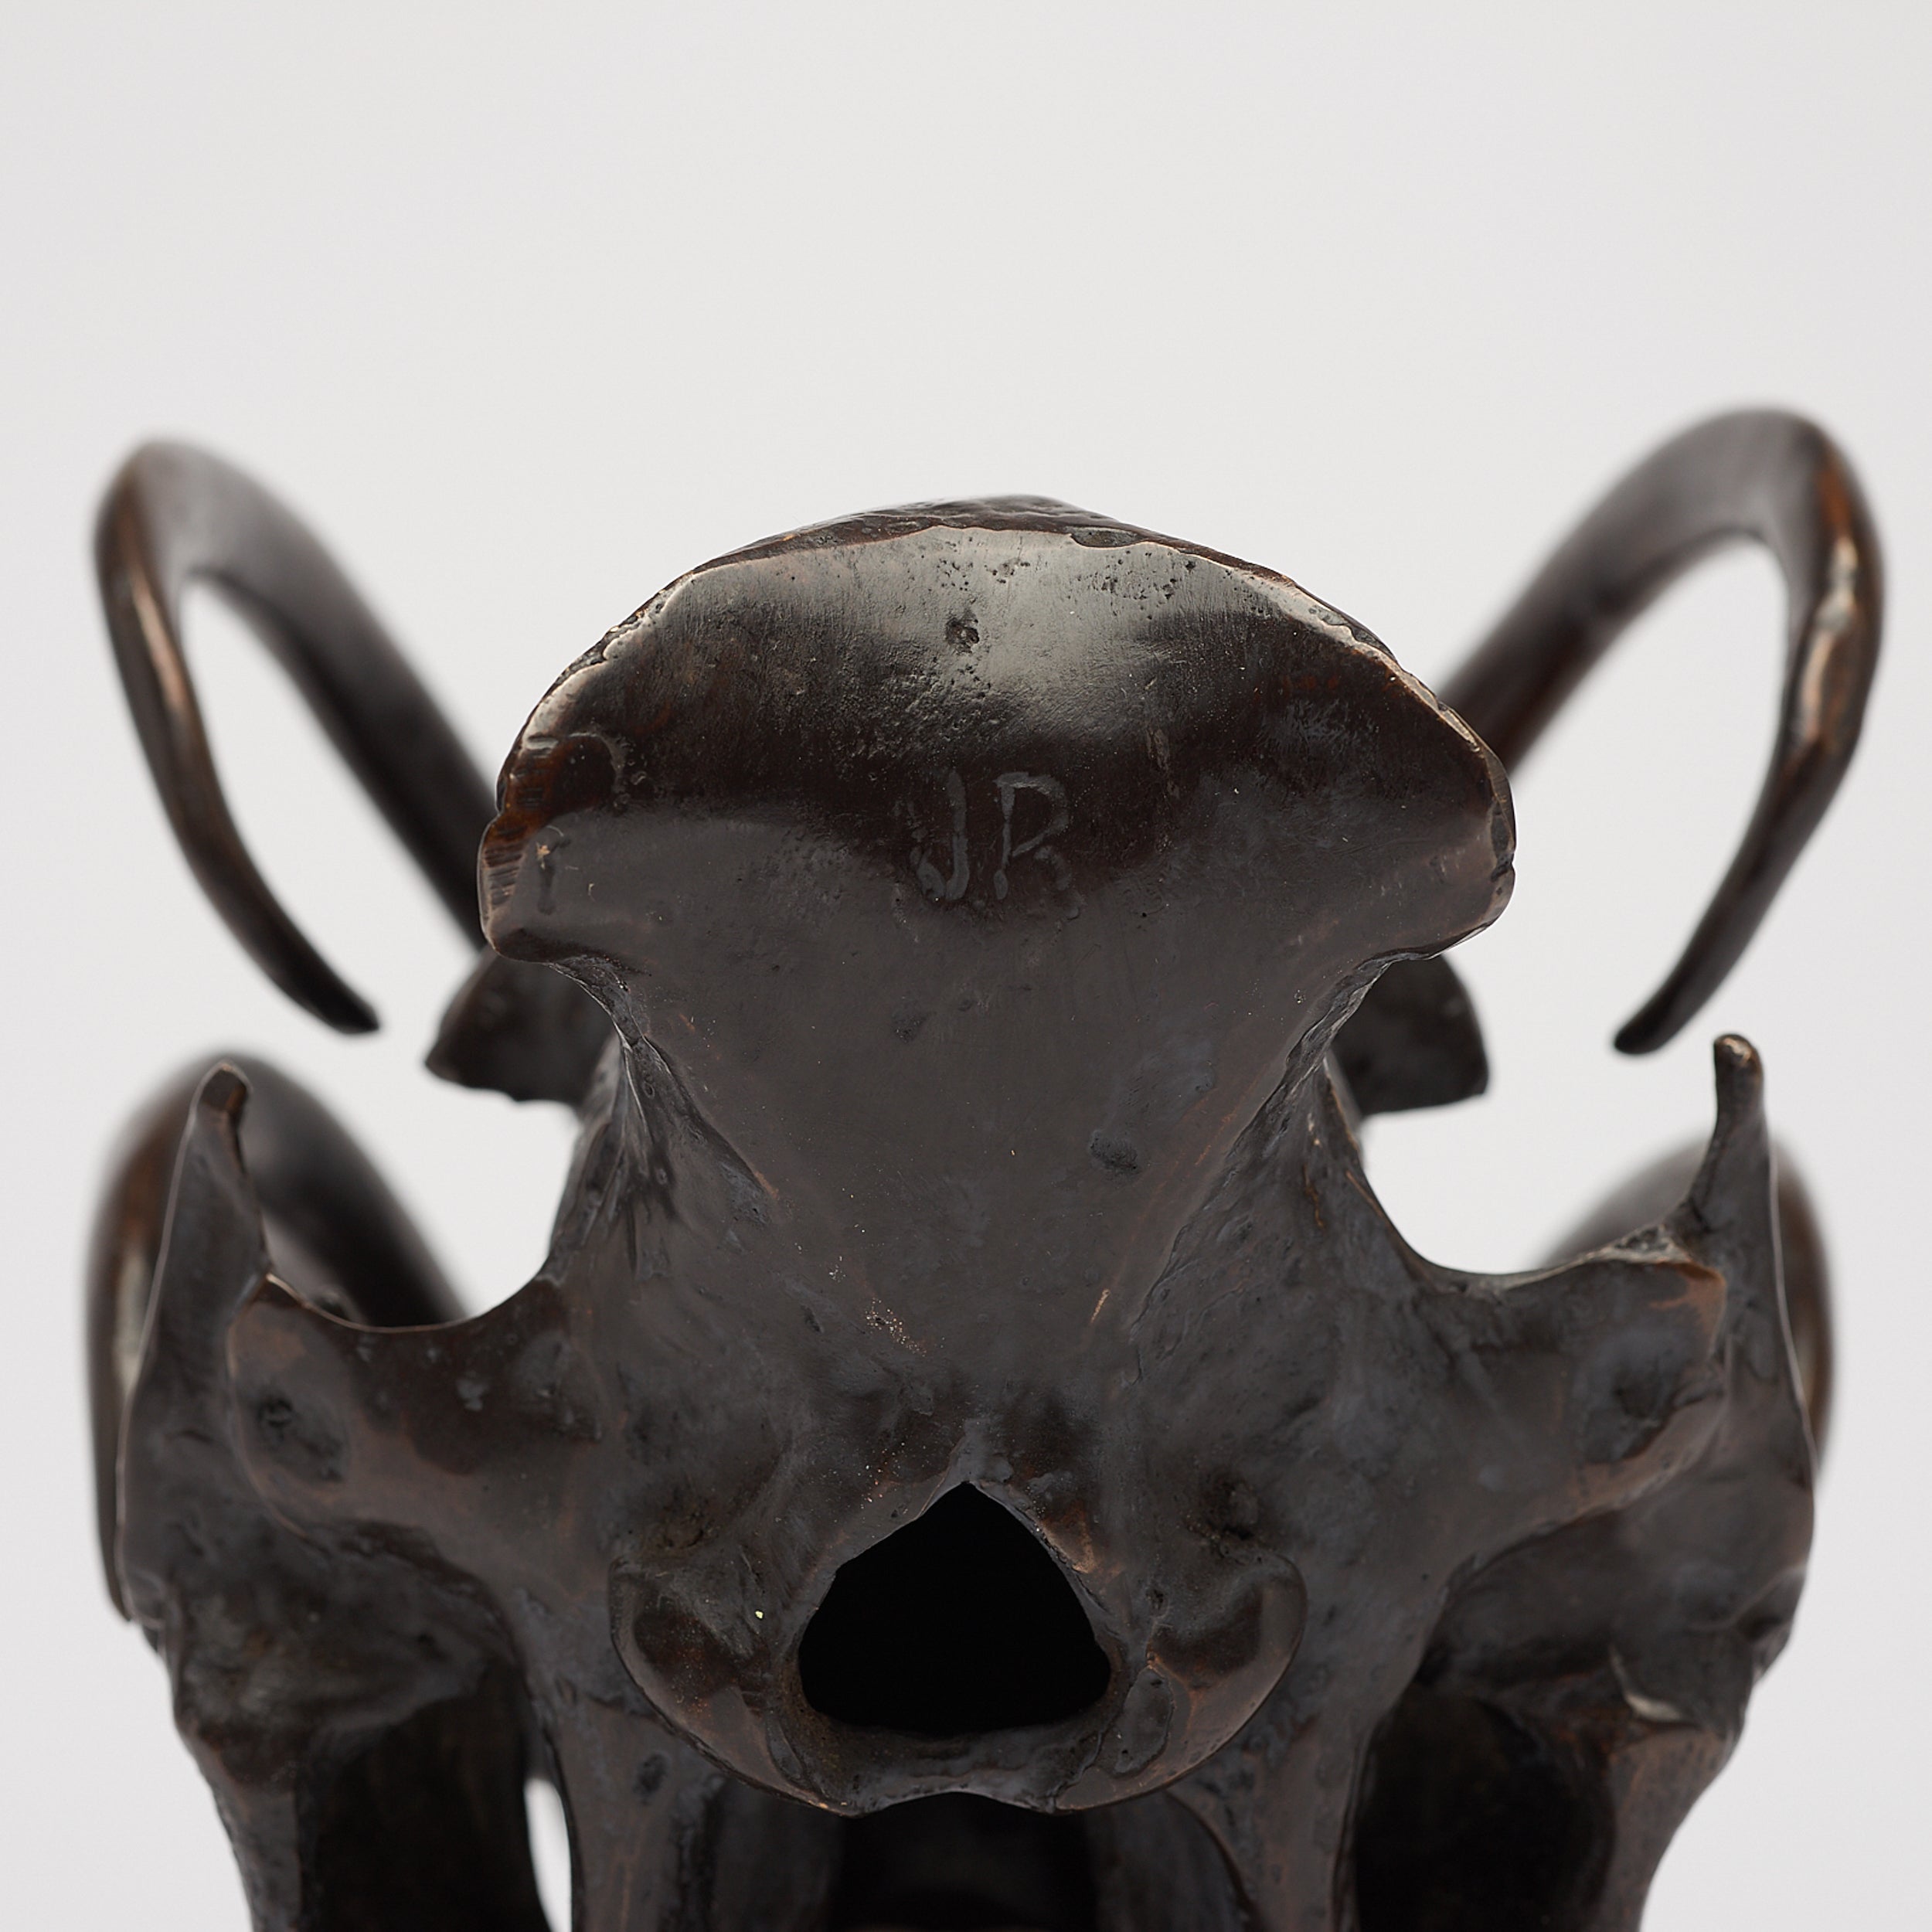 Babirusa Skull in bronze